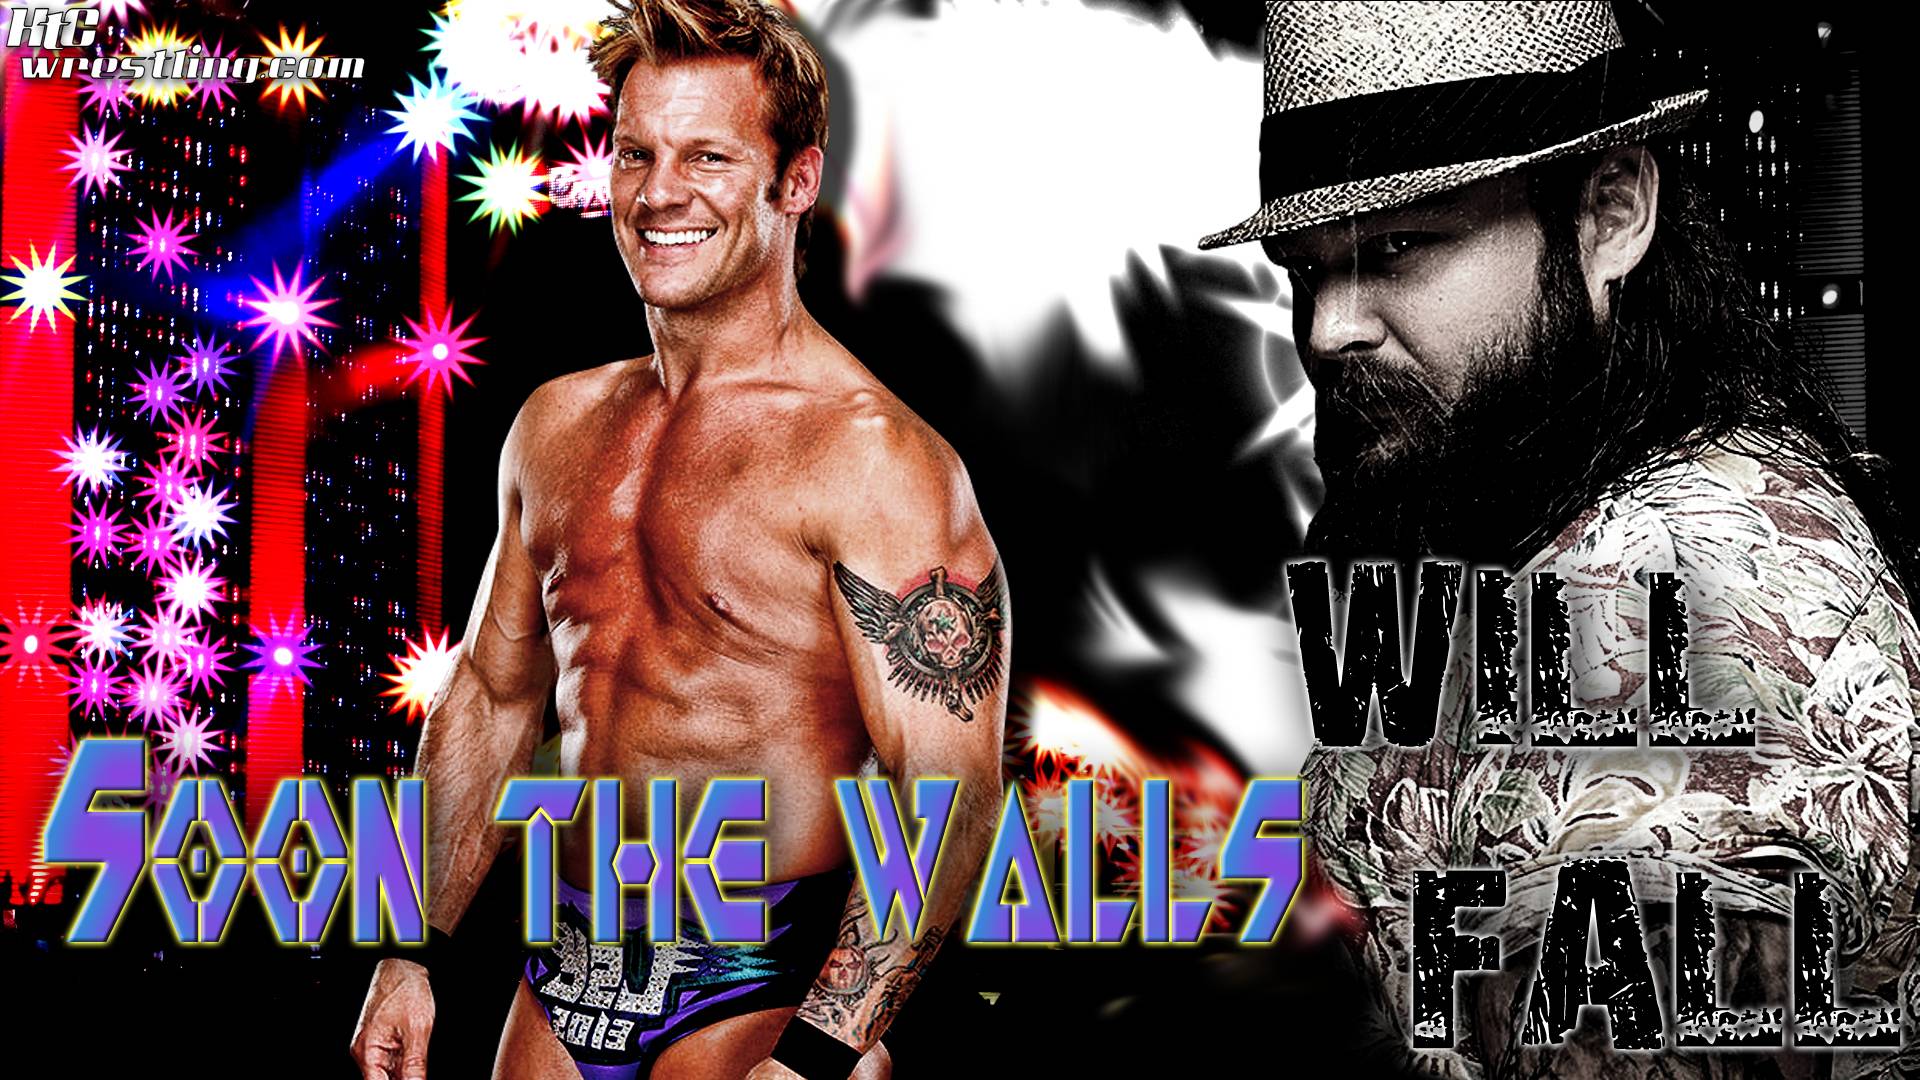 Inside Pulse Wrestling. Wallpaper Of The Week: Chris Jericho vs